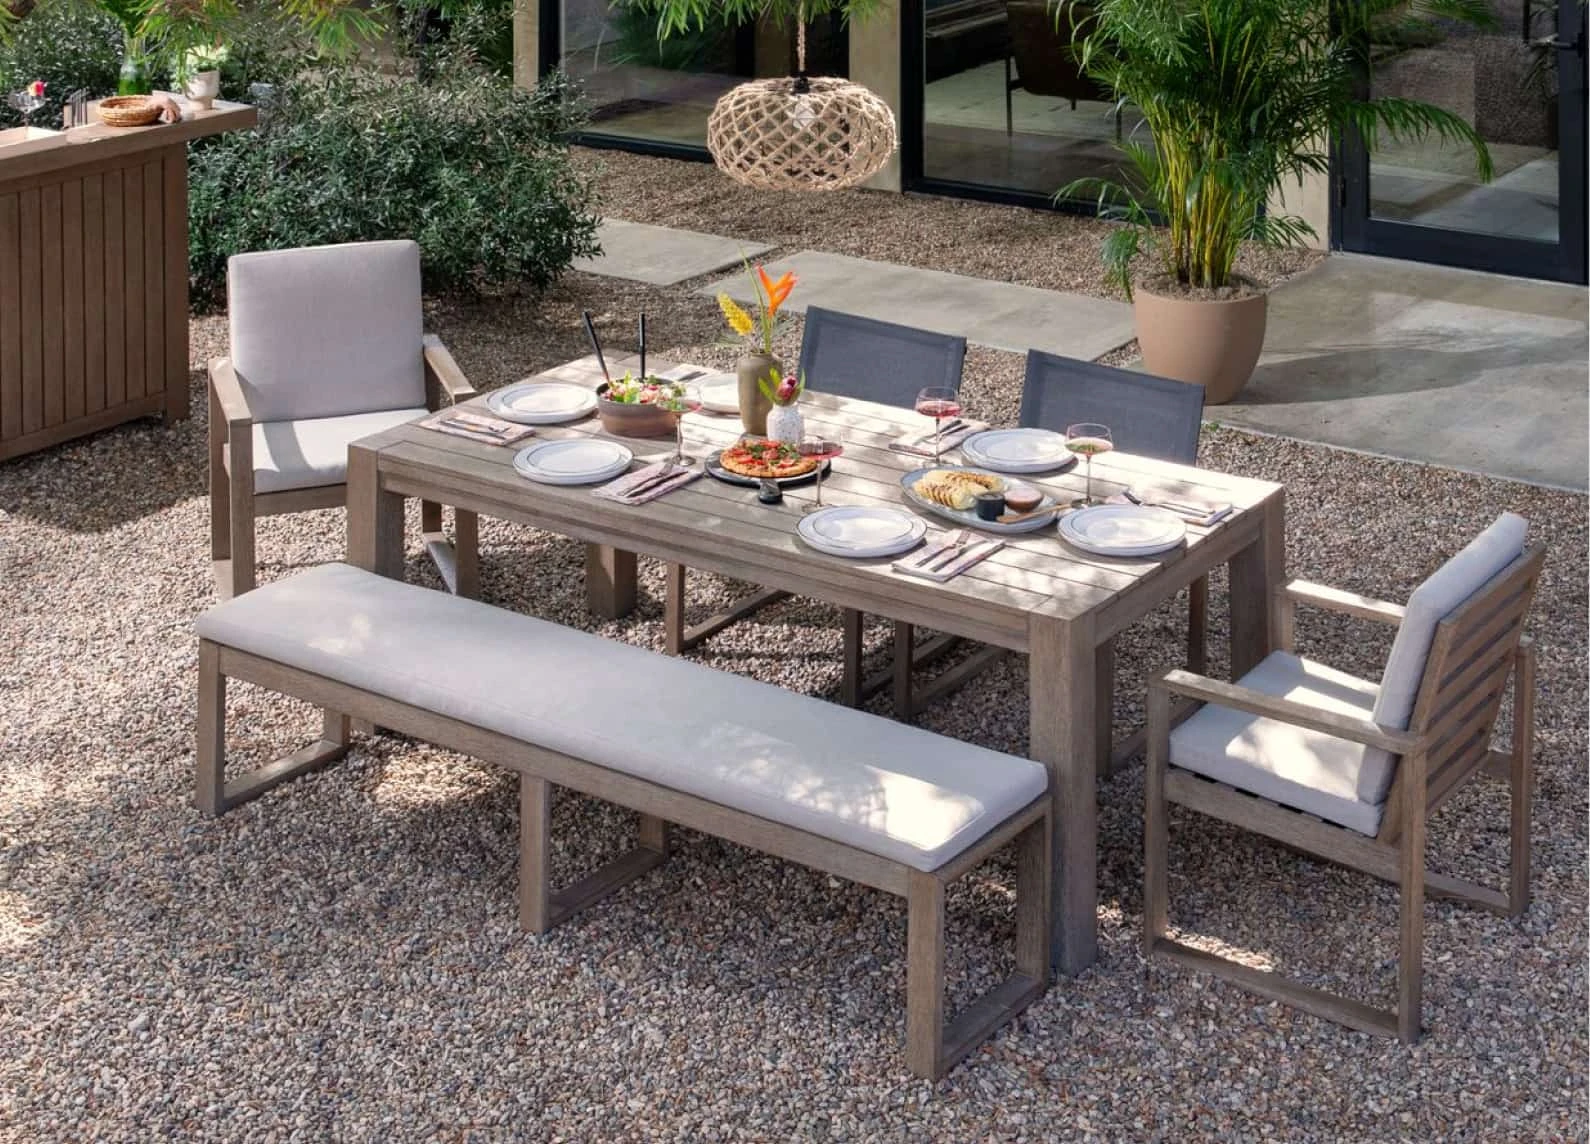 Malaga outdoor dining table